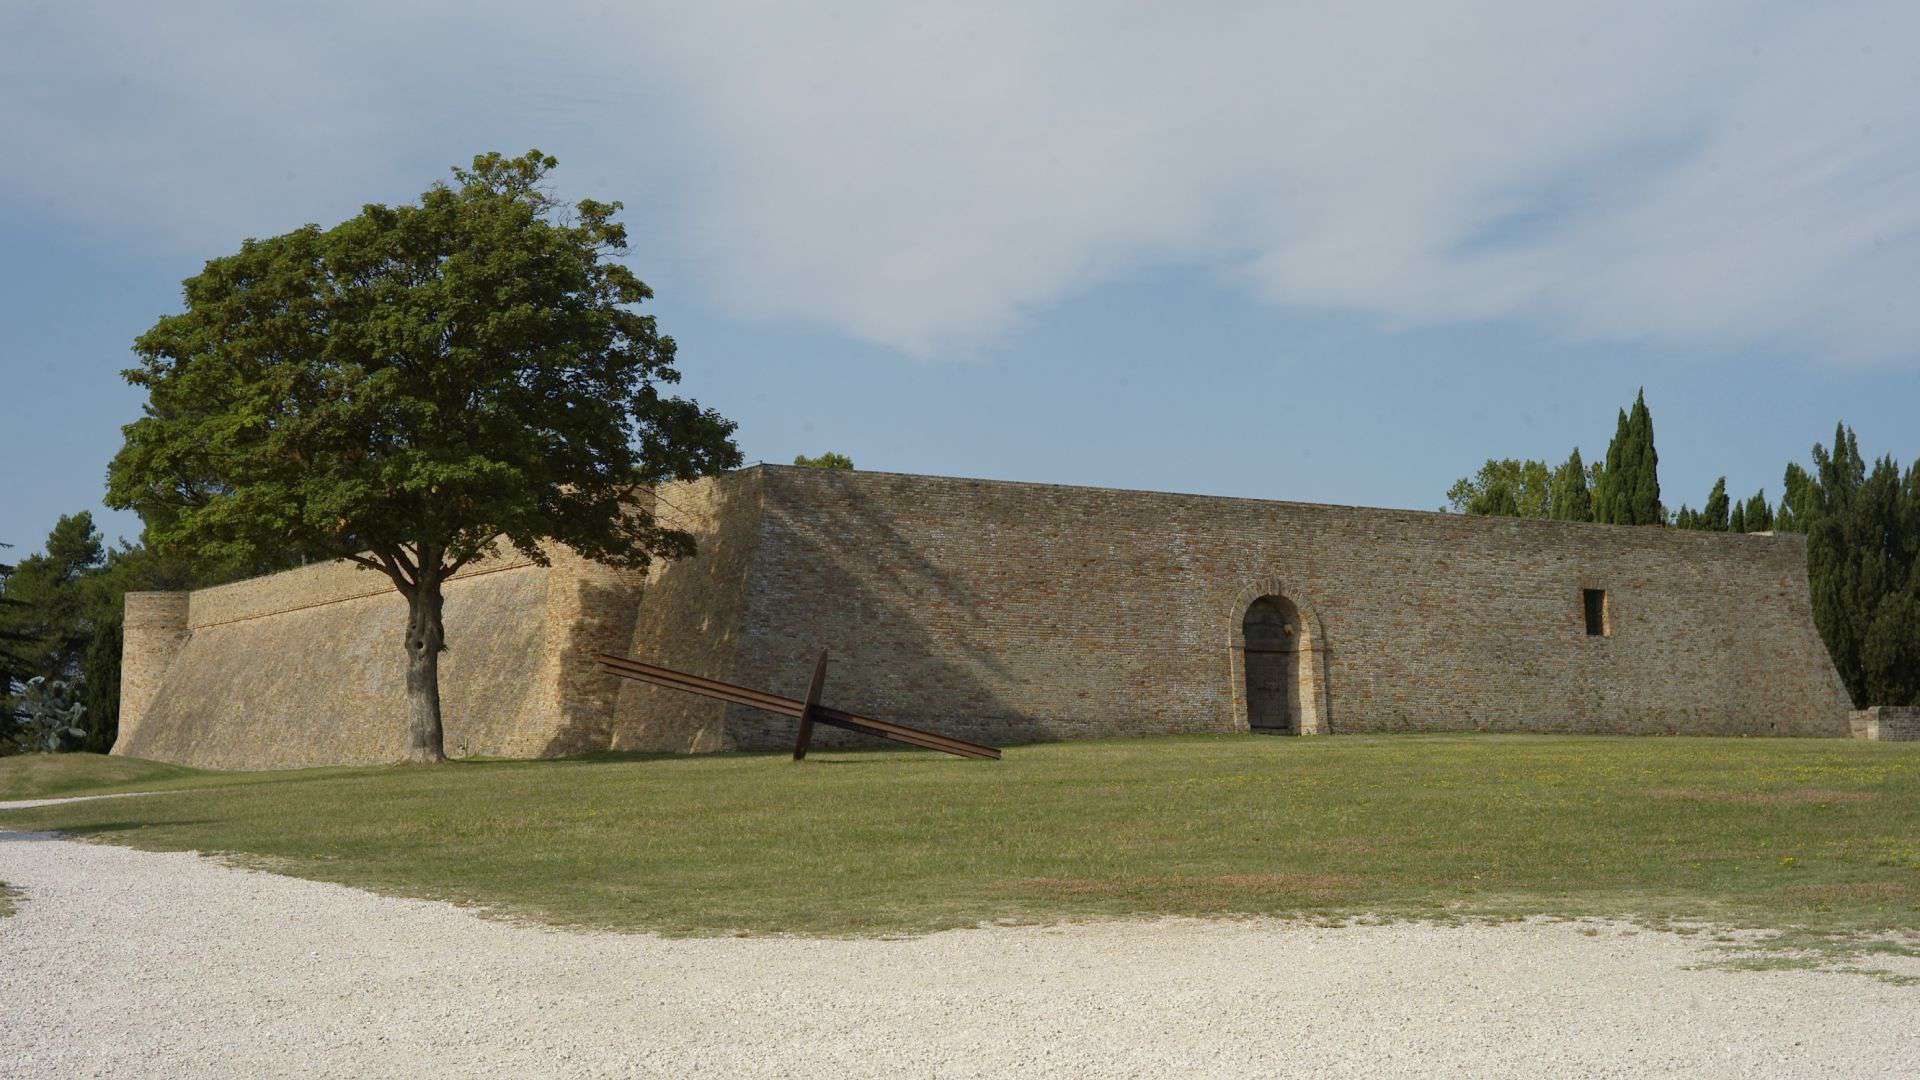 Entrance to the Albornoz Fortress (image source: Limoncellista)